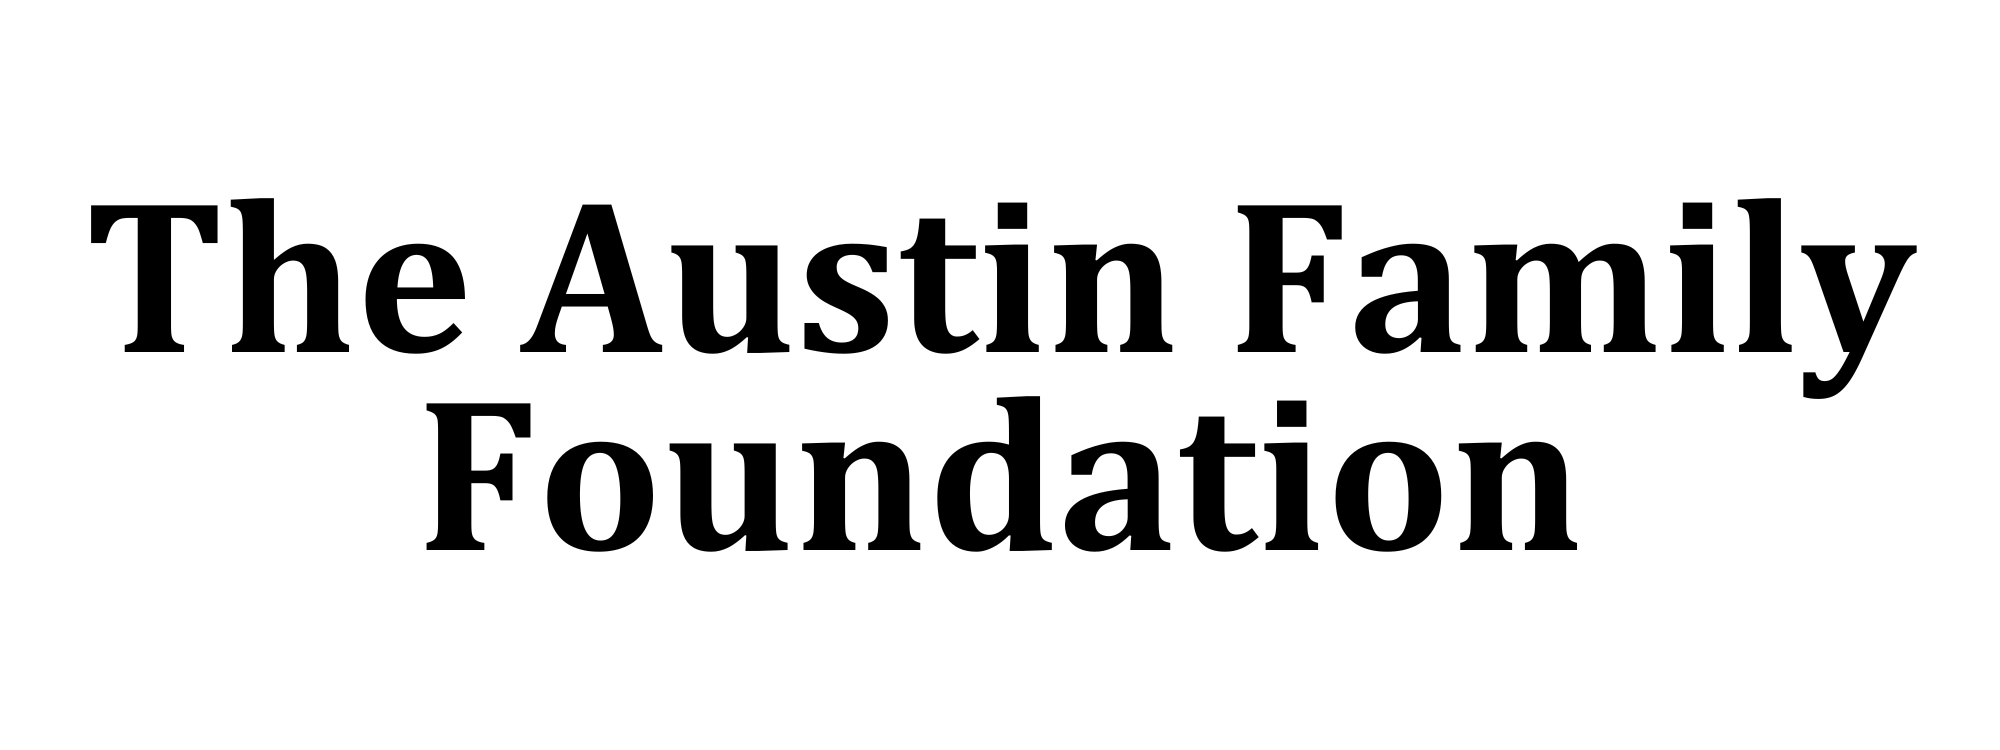 Austin Family Foundation logo.png